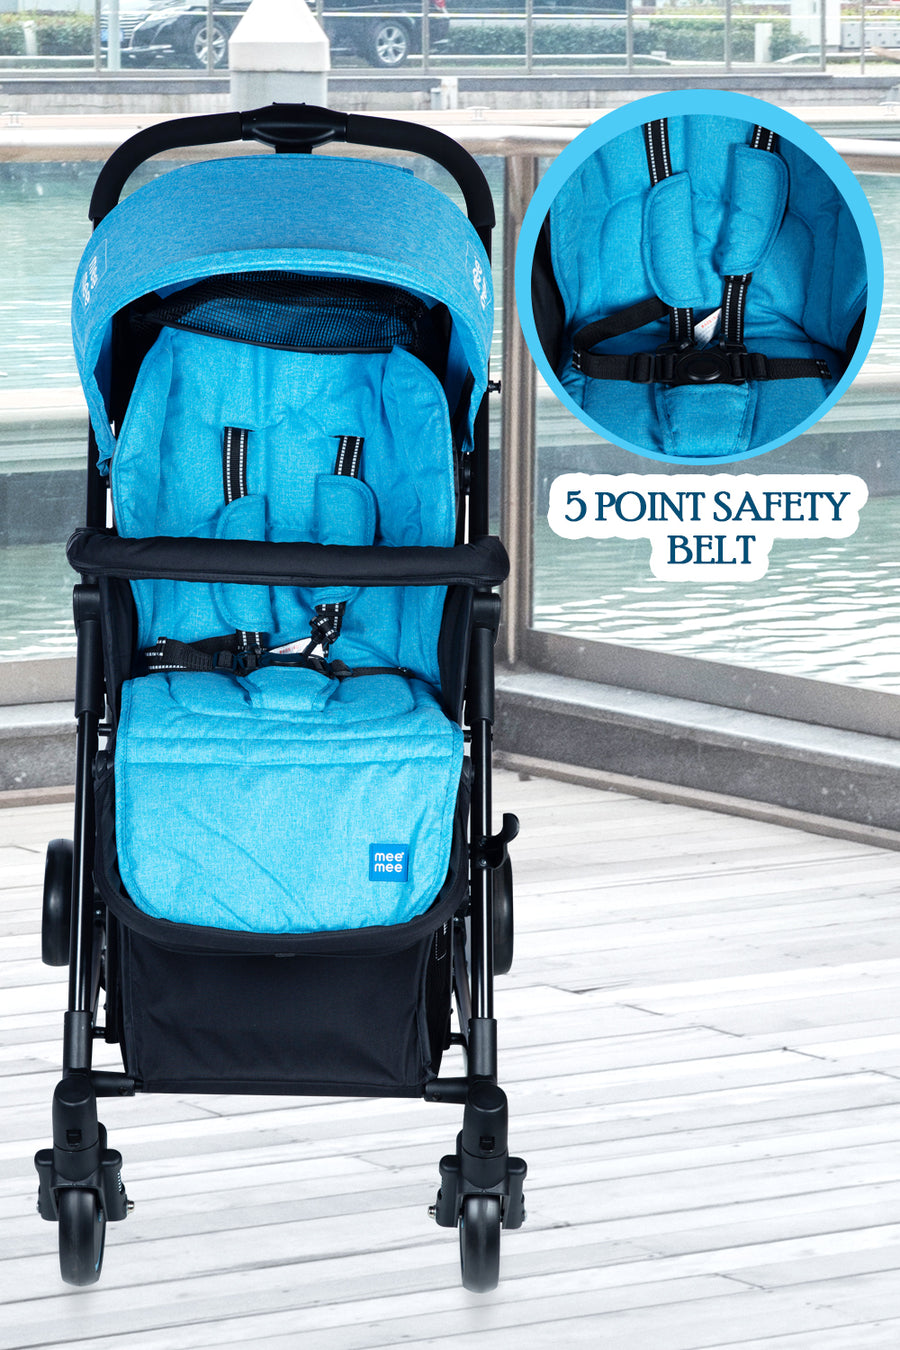 Mee Mee - Baby Pram Stroller with 5 Point Safety Belt